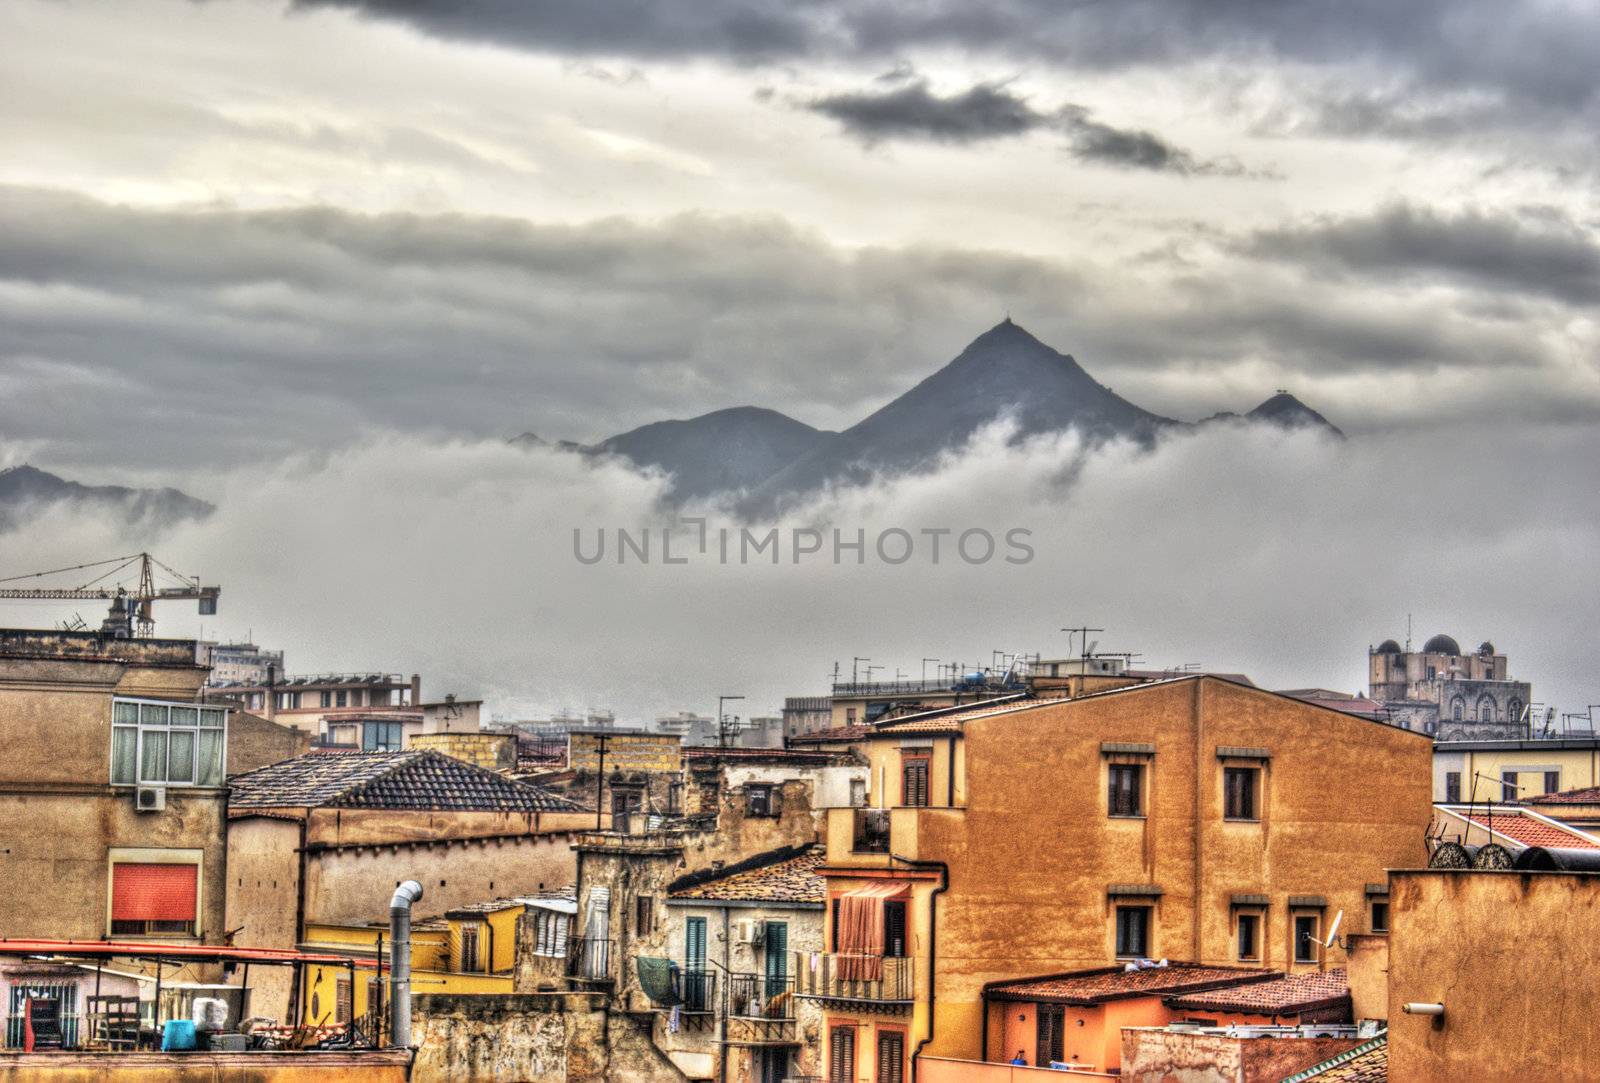  A Palermo city in the clouds by gandolfocannatella